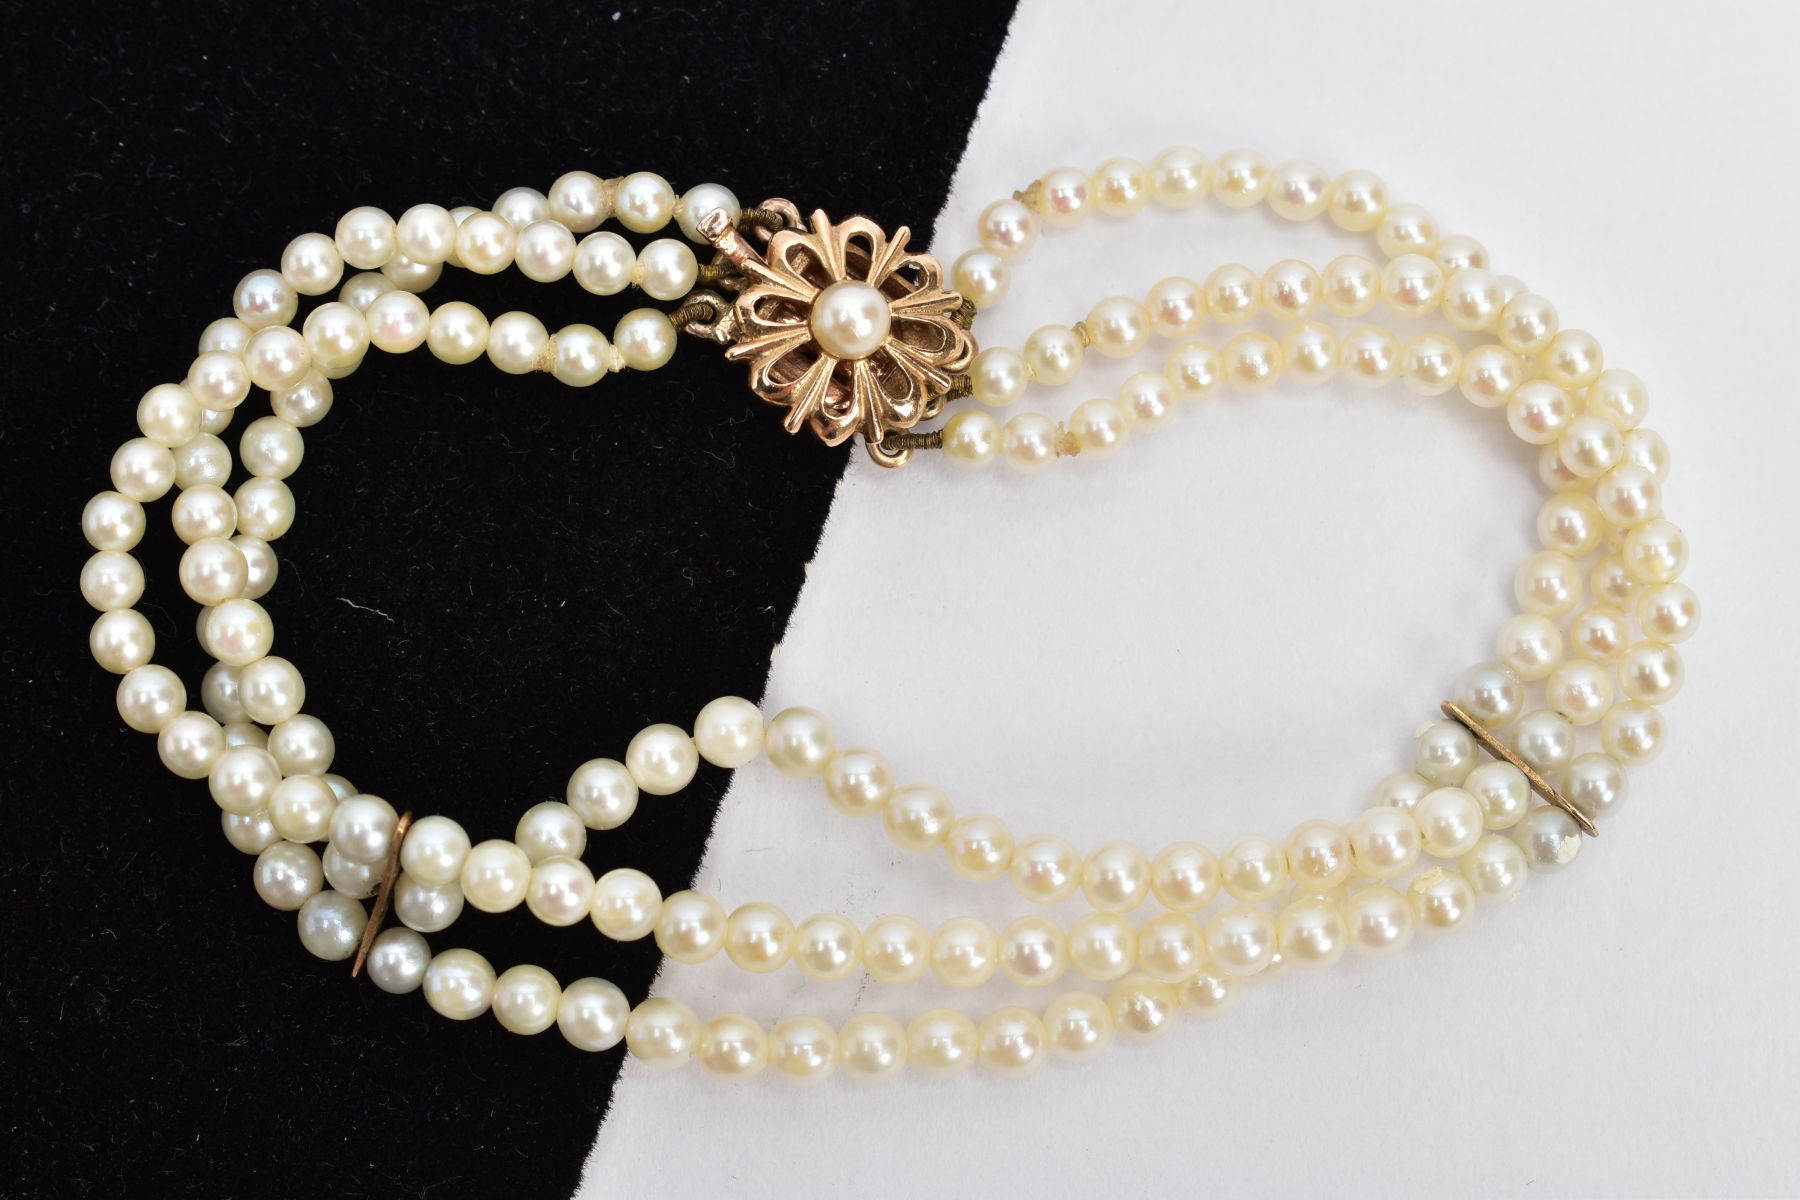 A CULTURED PEARL BRACELET, a three row cultured pearl bracelet, approximate pearl diameter 3mm,